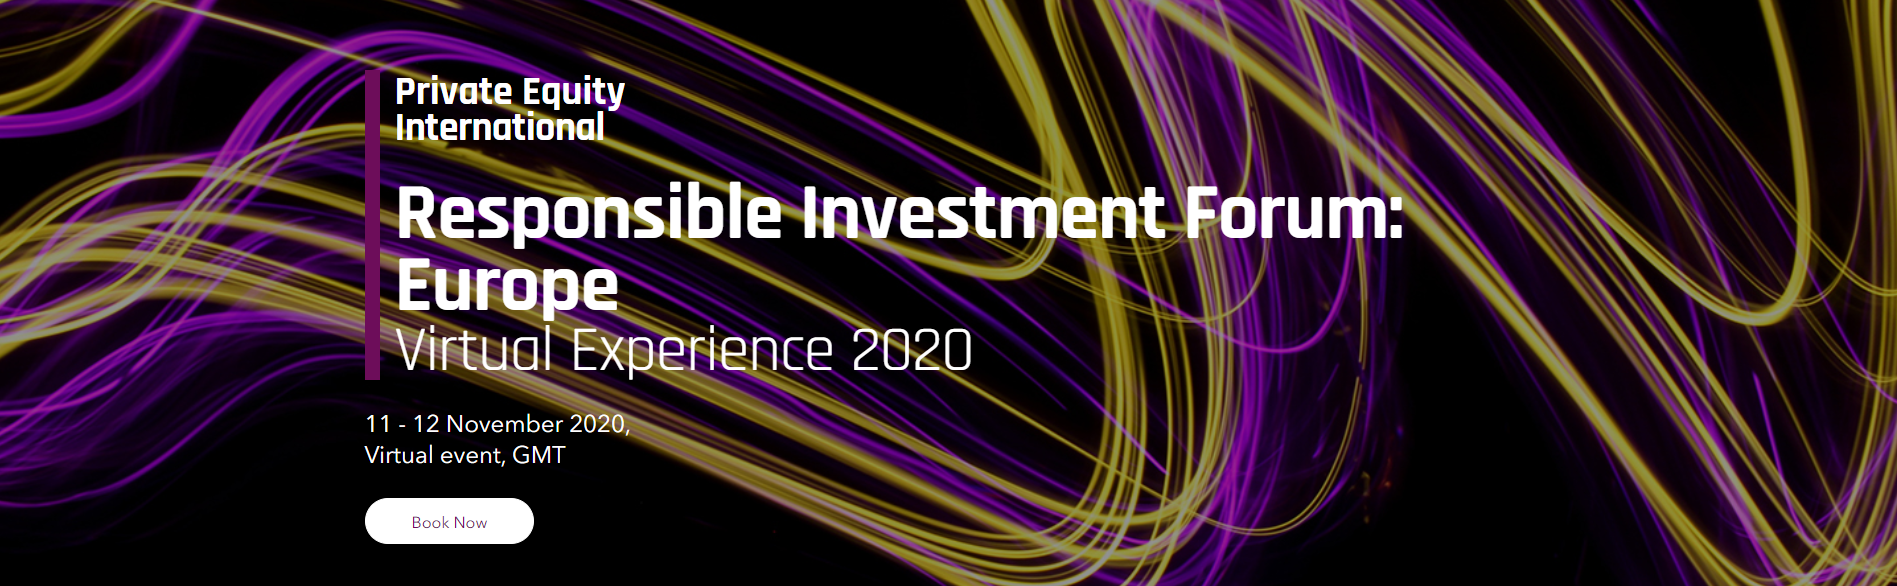 PEI Responsible Investment Forum Europe 2020 Ardian